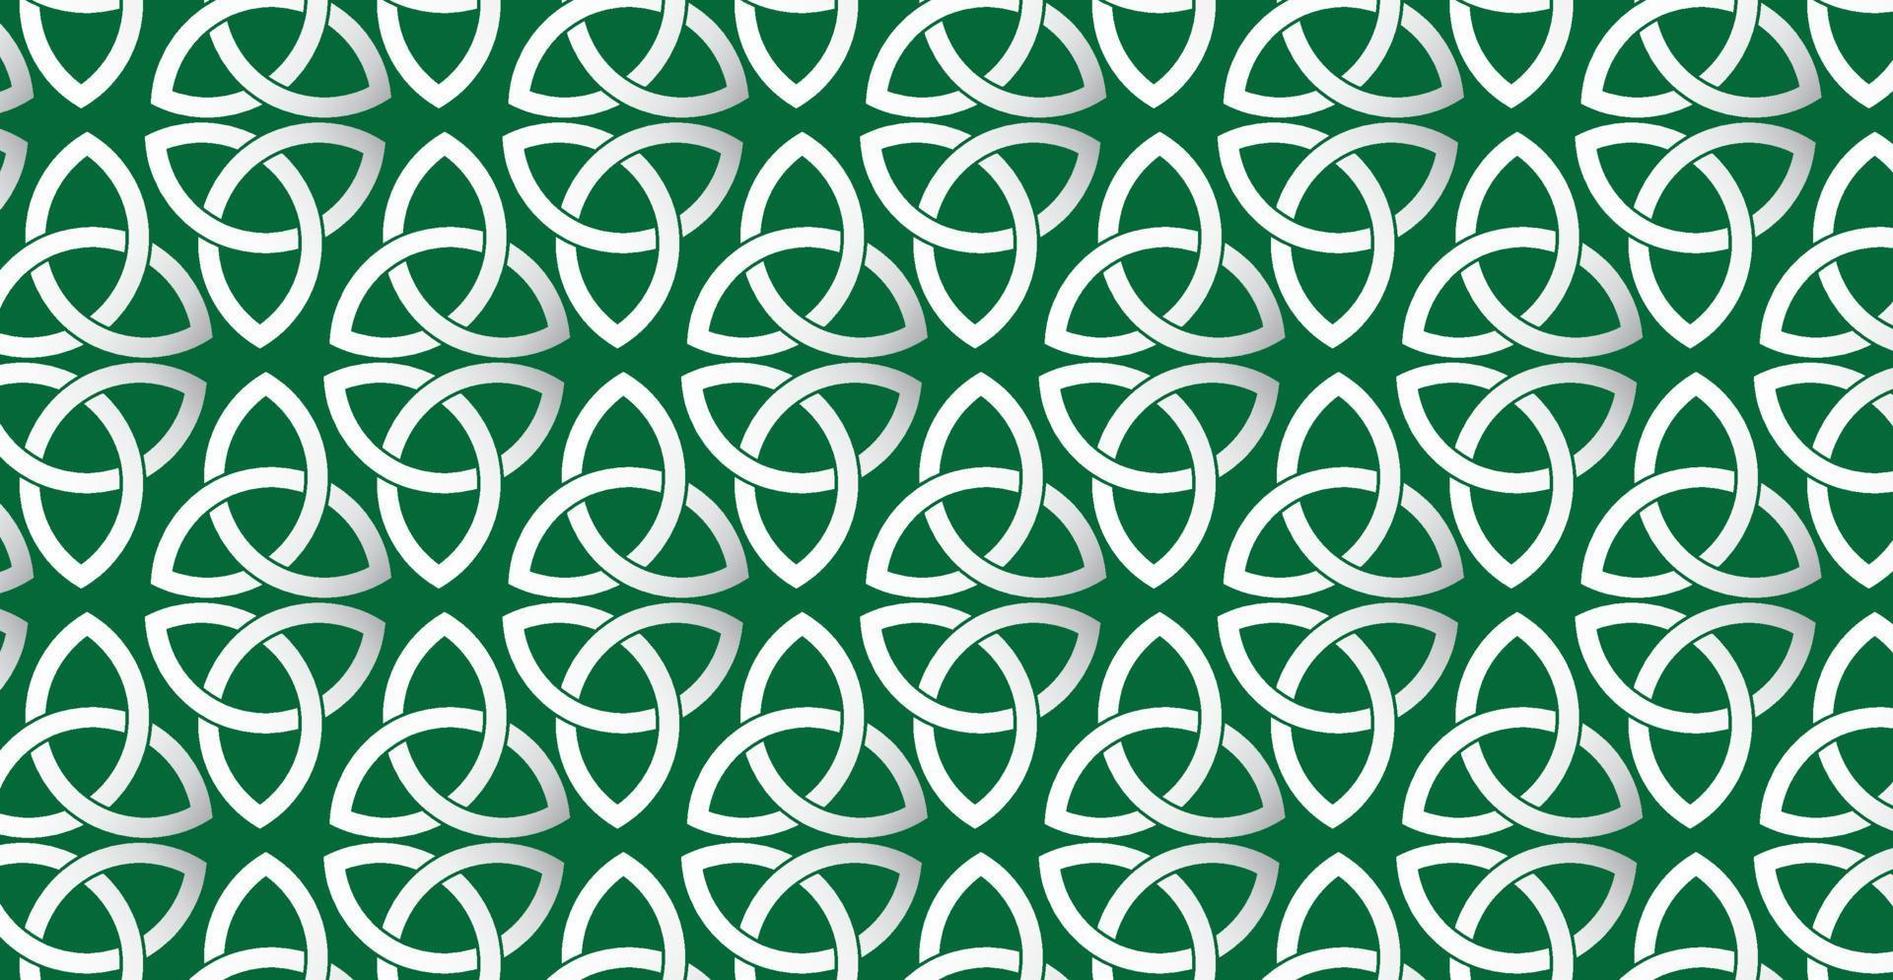 Keltisch triquetra symbolen patroon. elegant ornament op groene achtergrond. Ierse st. Patrick's dag. vector illustratie